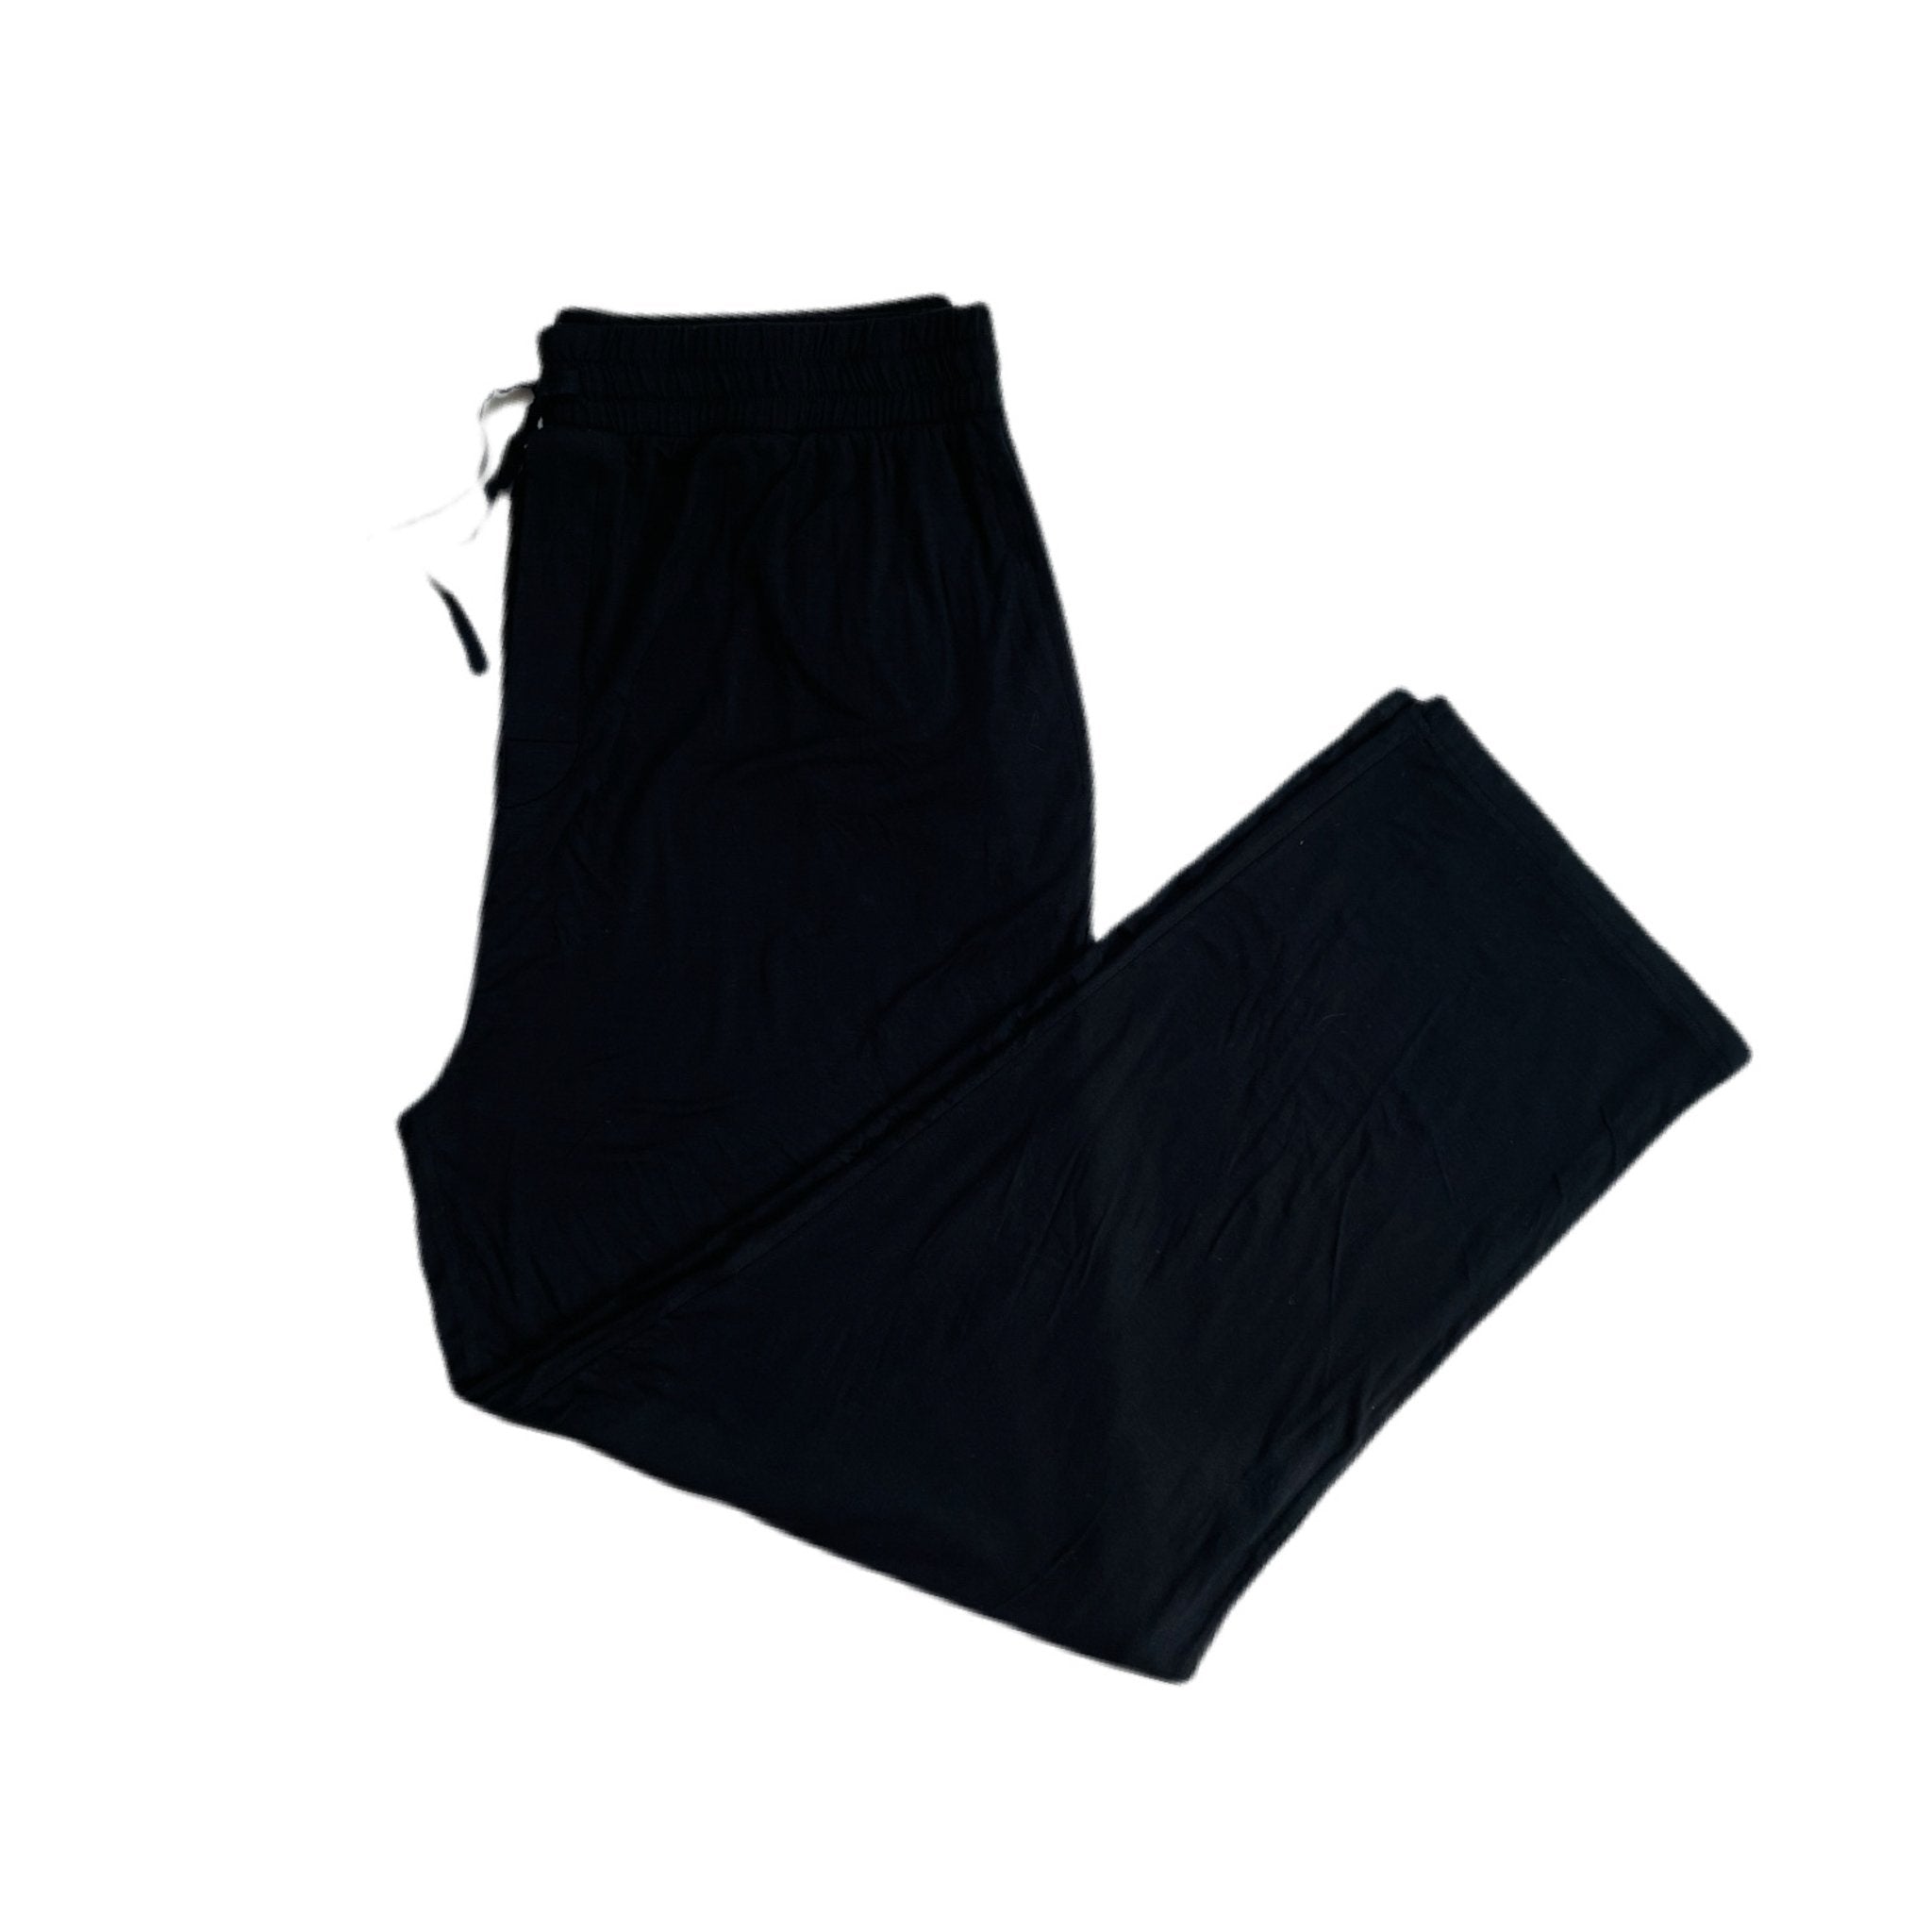 Buy CYZ Men's 100% Cotton Jersey Knit Pajama Sleep/Lounge, Black, Size  Medium at Amazon.in